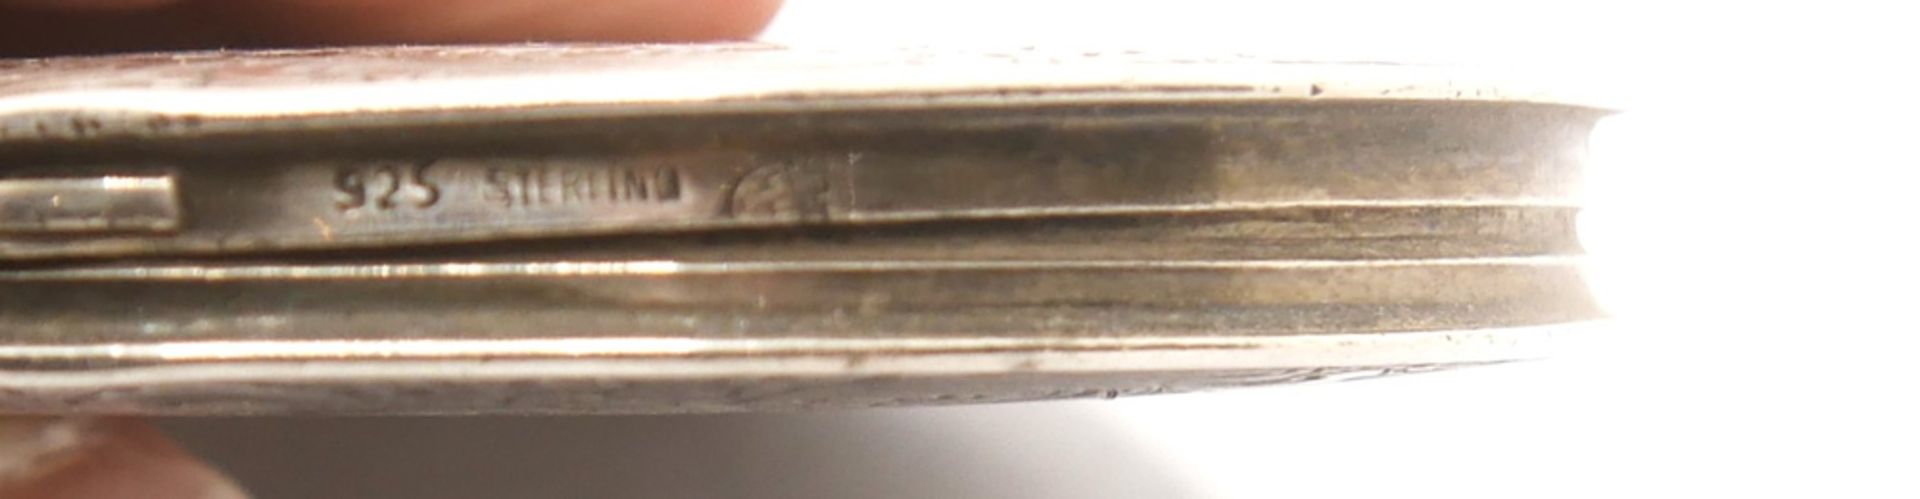 Puderdose mit Spiegel, 925er Sterling, mit floralem Design. Durchmesser ca. 7 cm - Image 3 of 3